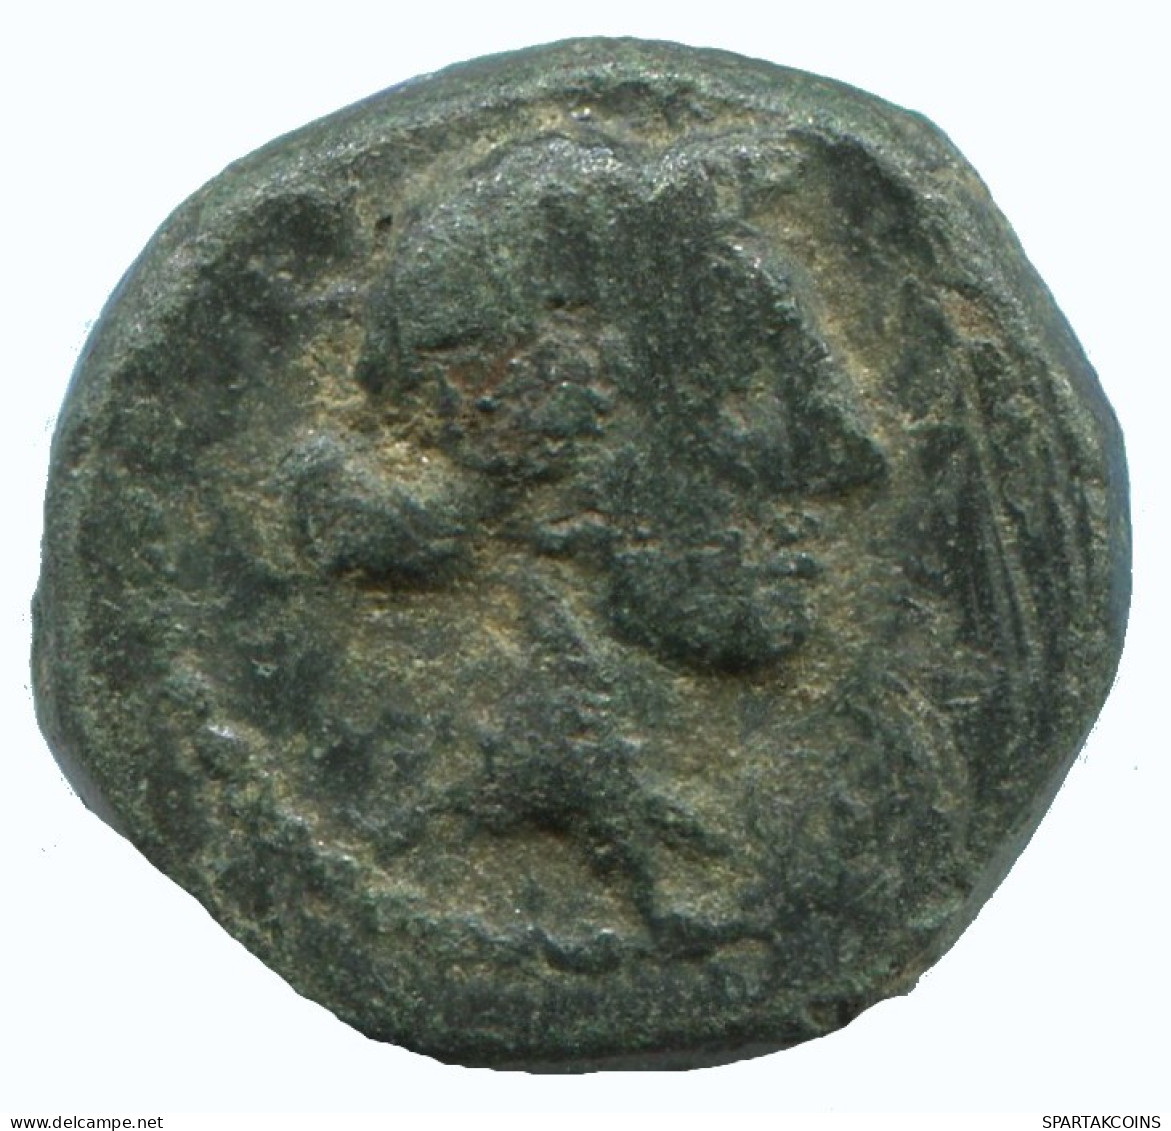 WREATH Authentic Original Ancient GREEK Coin 3g/15mm #NNN1442.9.U.A - Greek